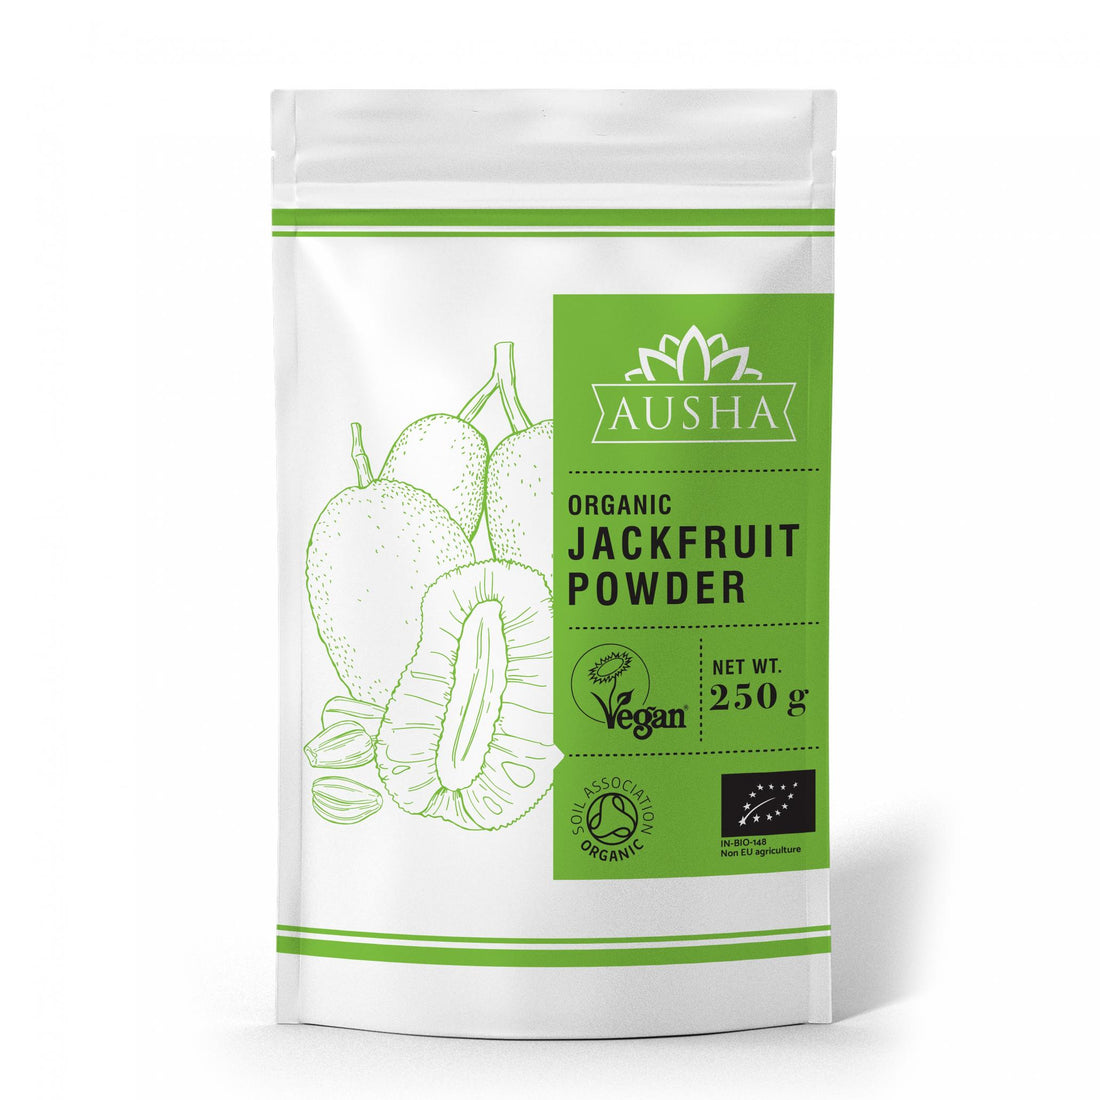 Ausha Organic Jackfruit Powder 250g